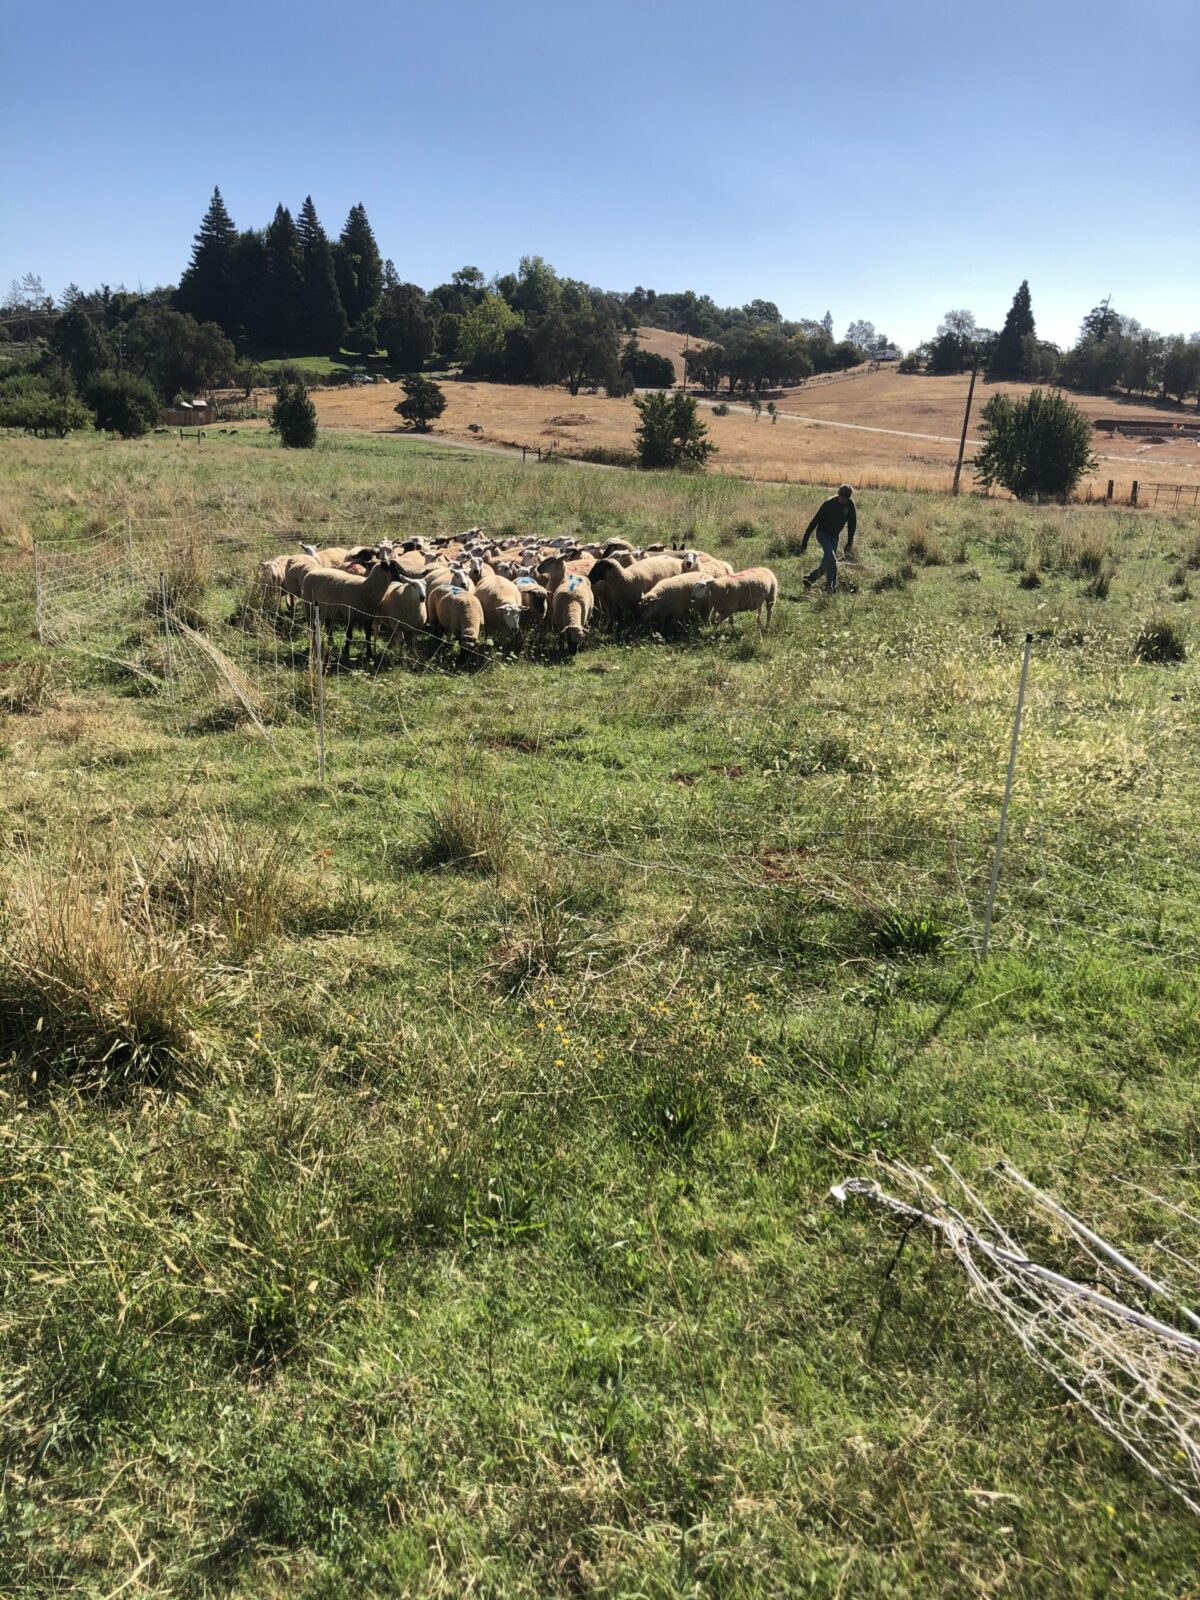 sheep grazing in field